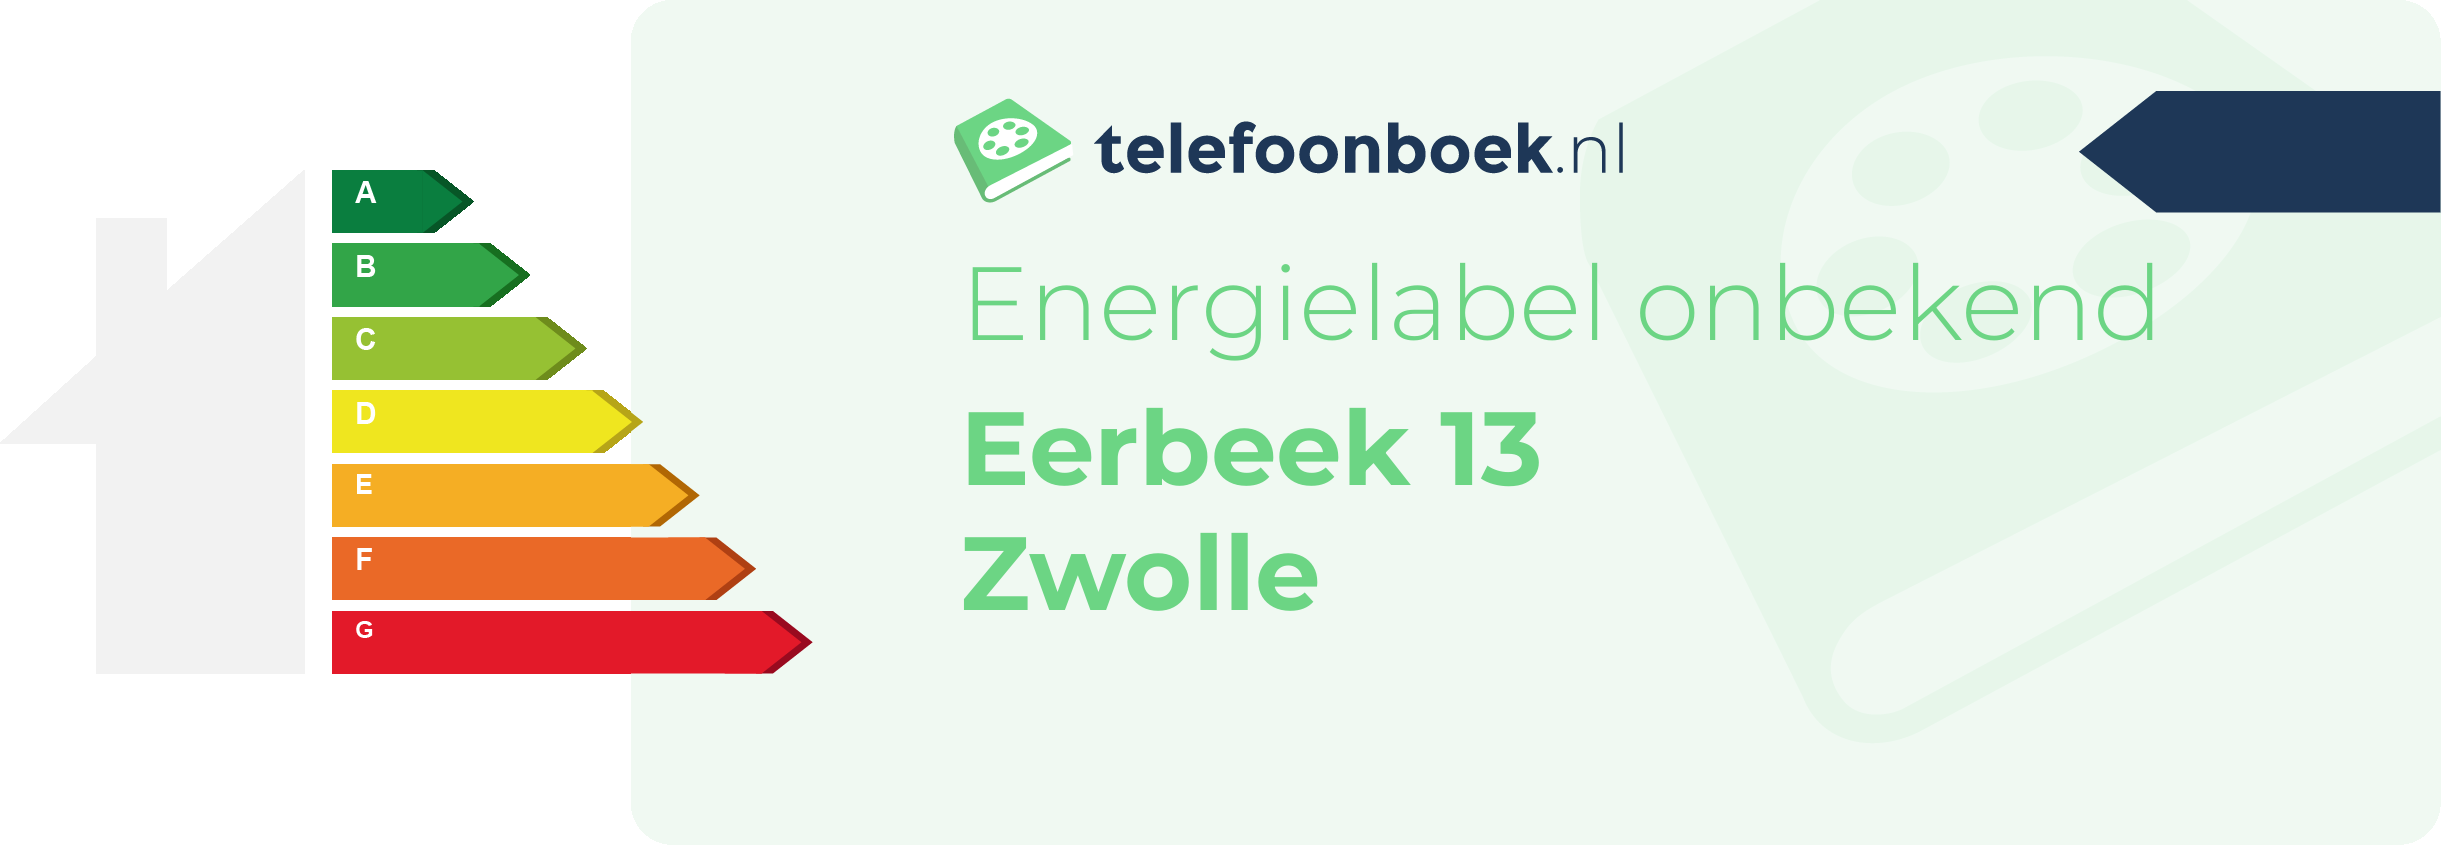 Energielabel Eerbeek 13 Zwolle